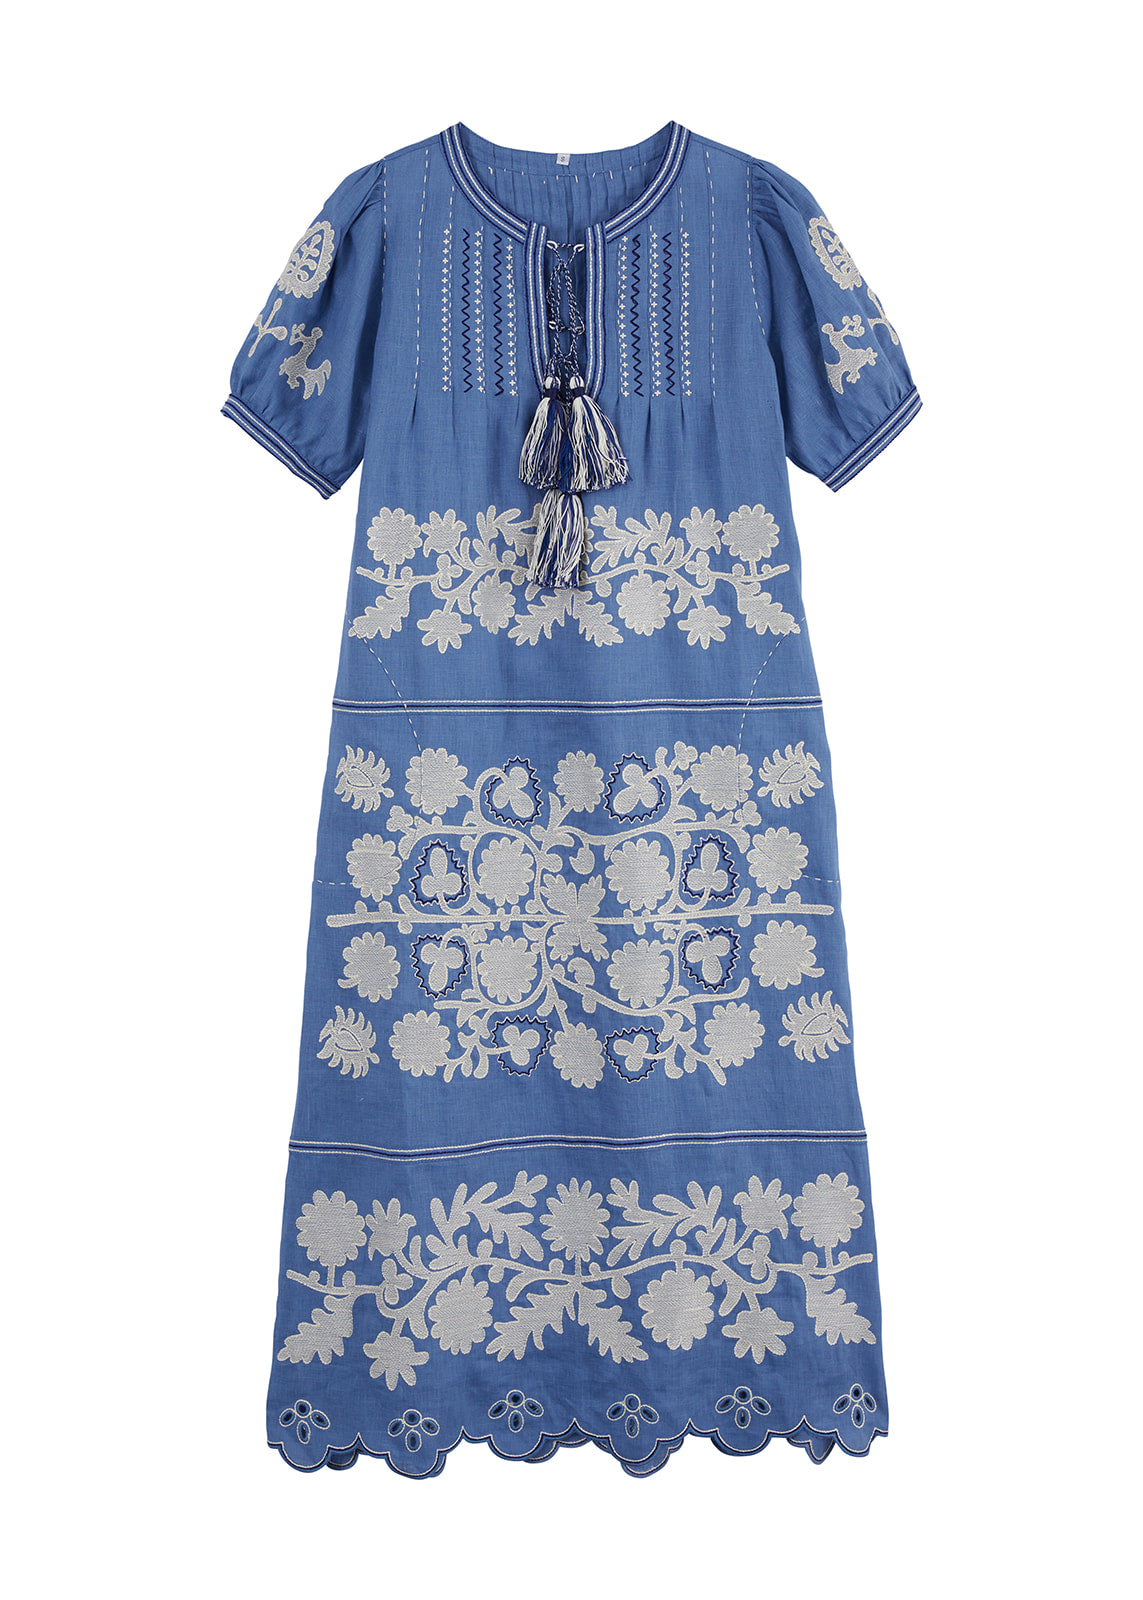 Natalia Ukrainian Embroidered Dress - French Blue, Navy, White by Larkin Lane